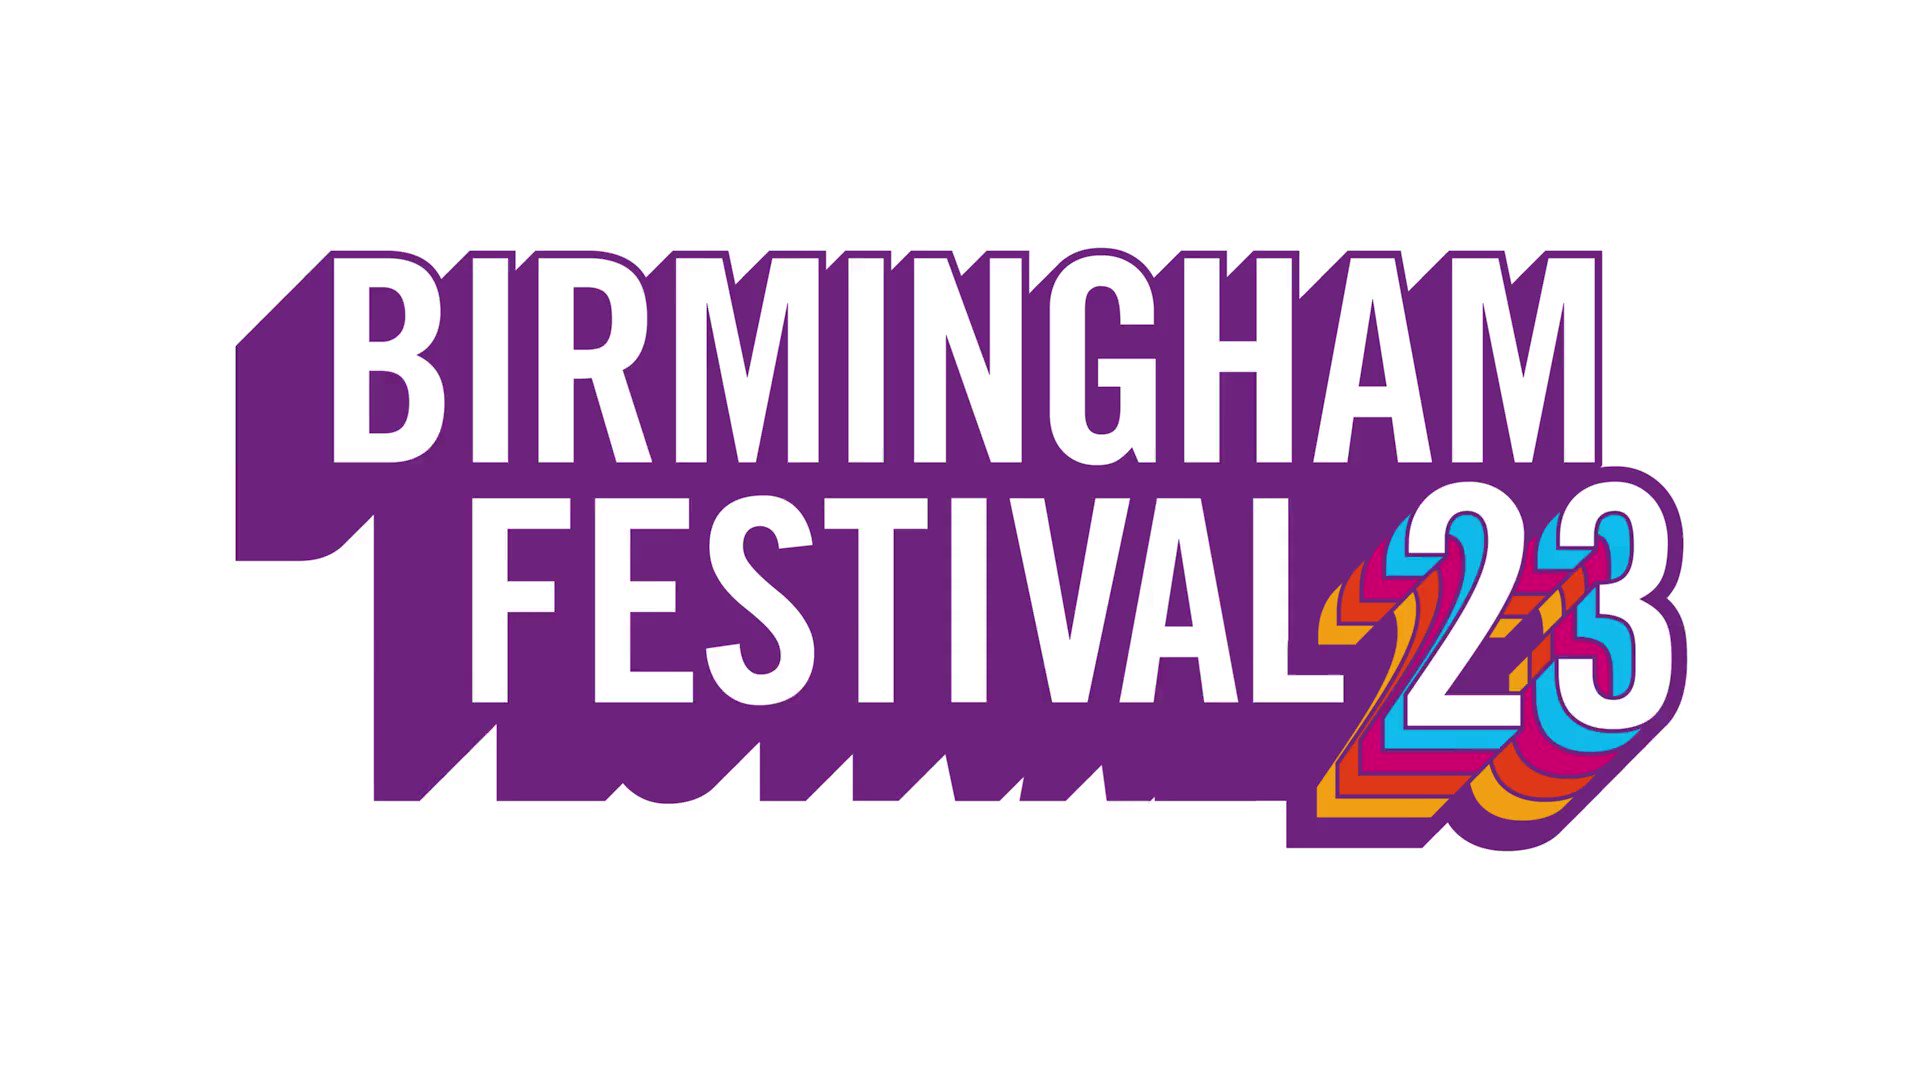 BirminghamFestival23 on Twitter "Announcing Birmingham Festival 23